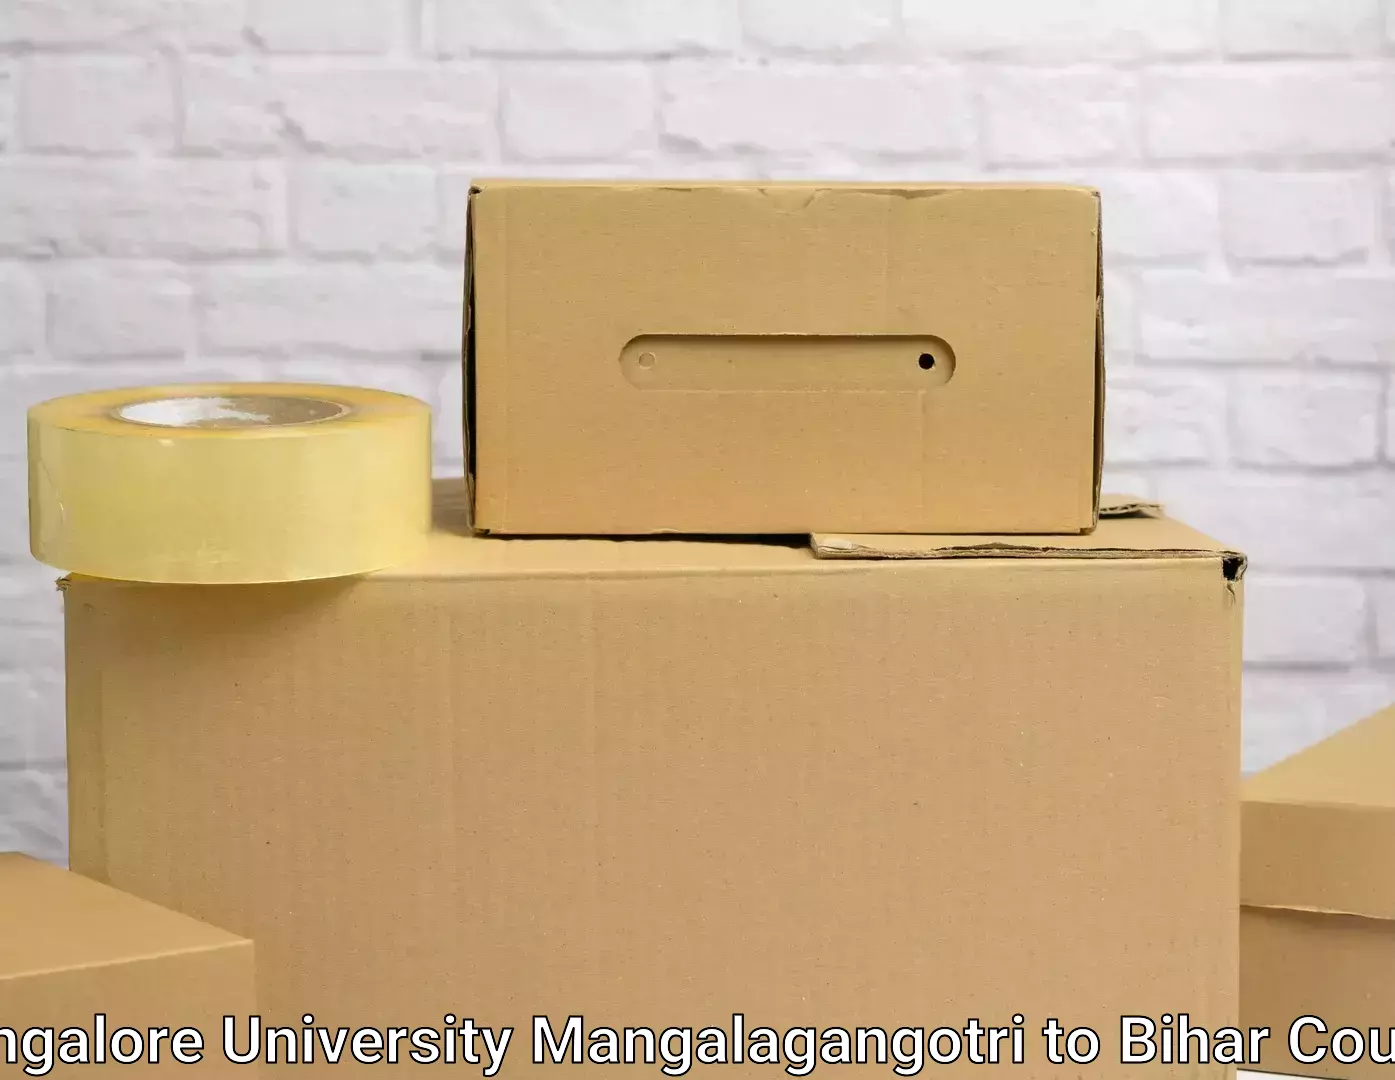 Furniture relocation experts Mangalore University Mangalagangotri to Bihar